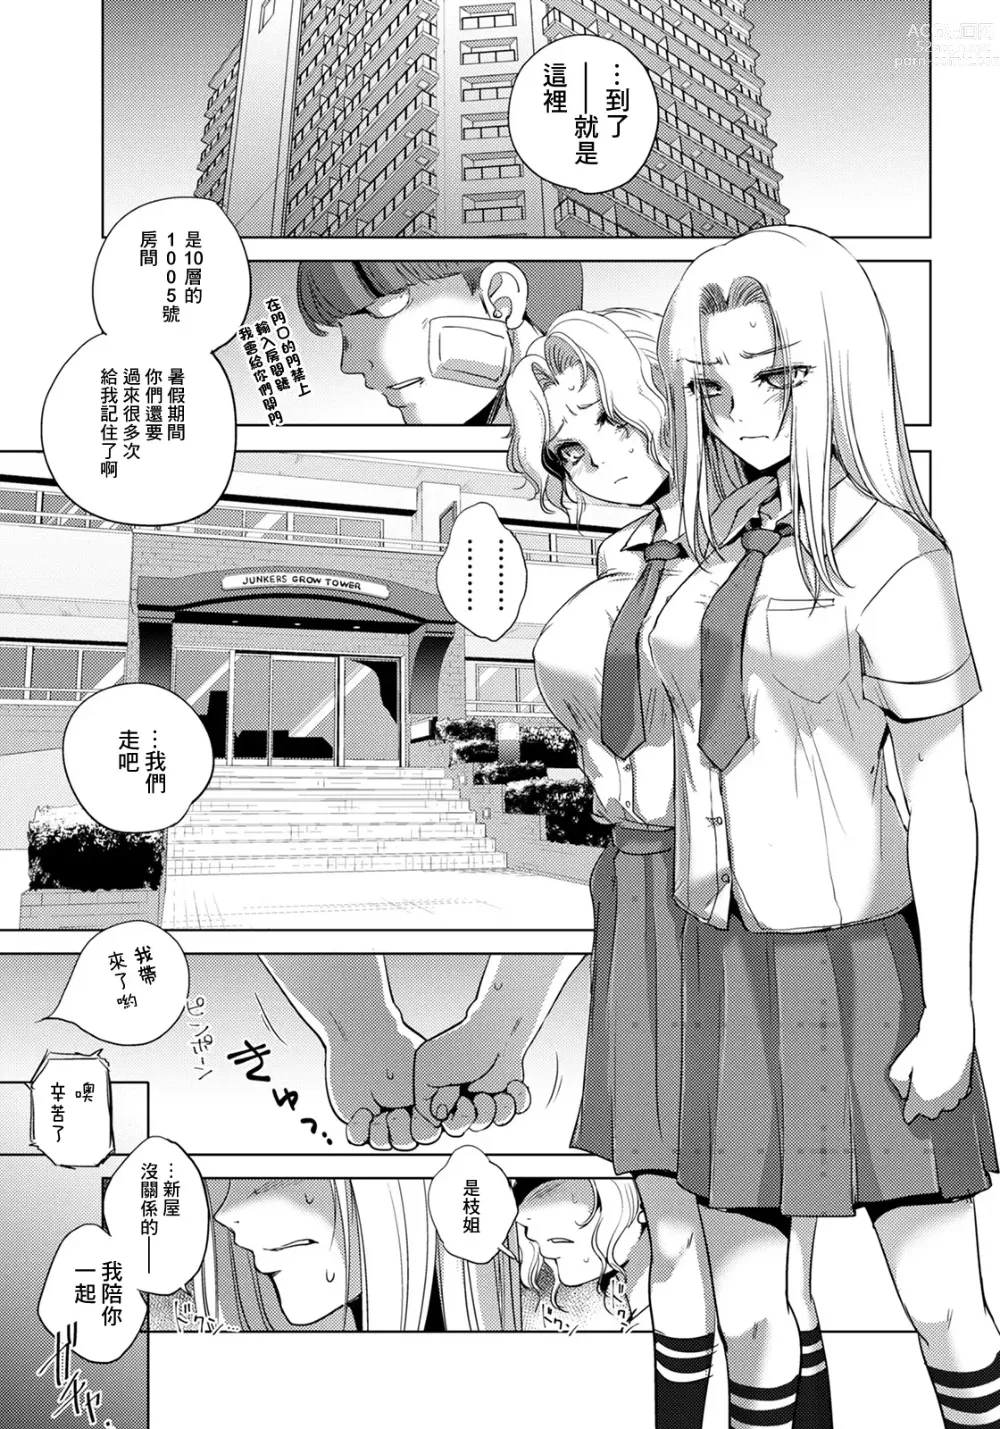 Page 3 of manga Suieibu no Sannin